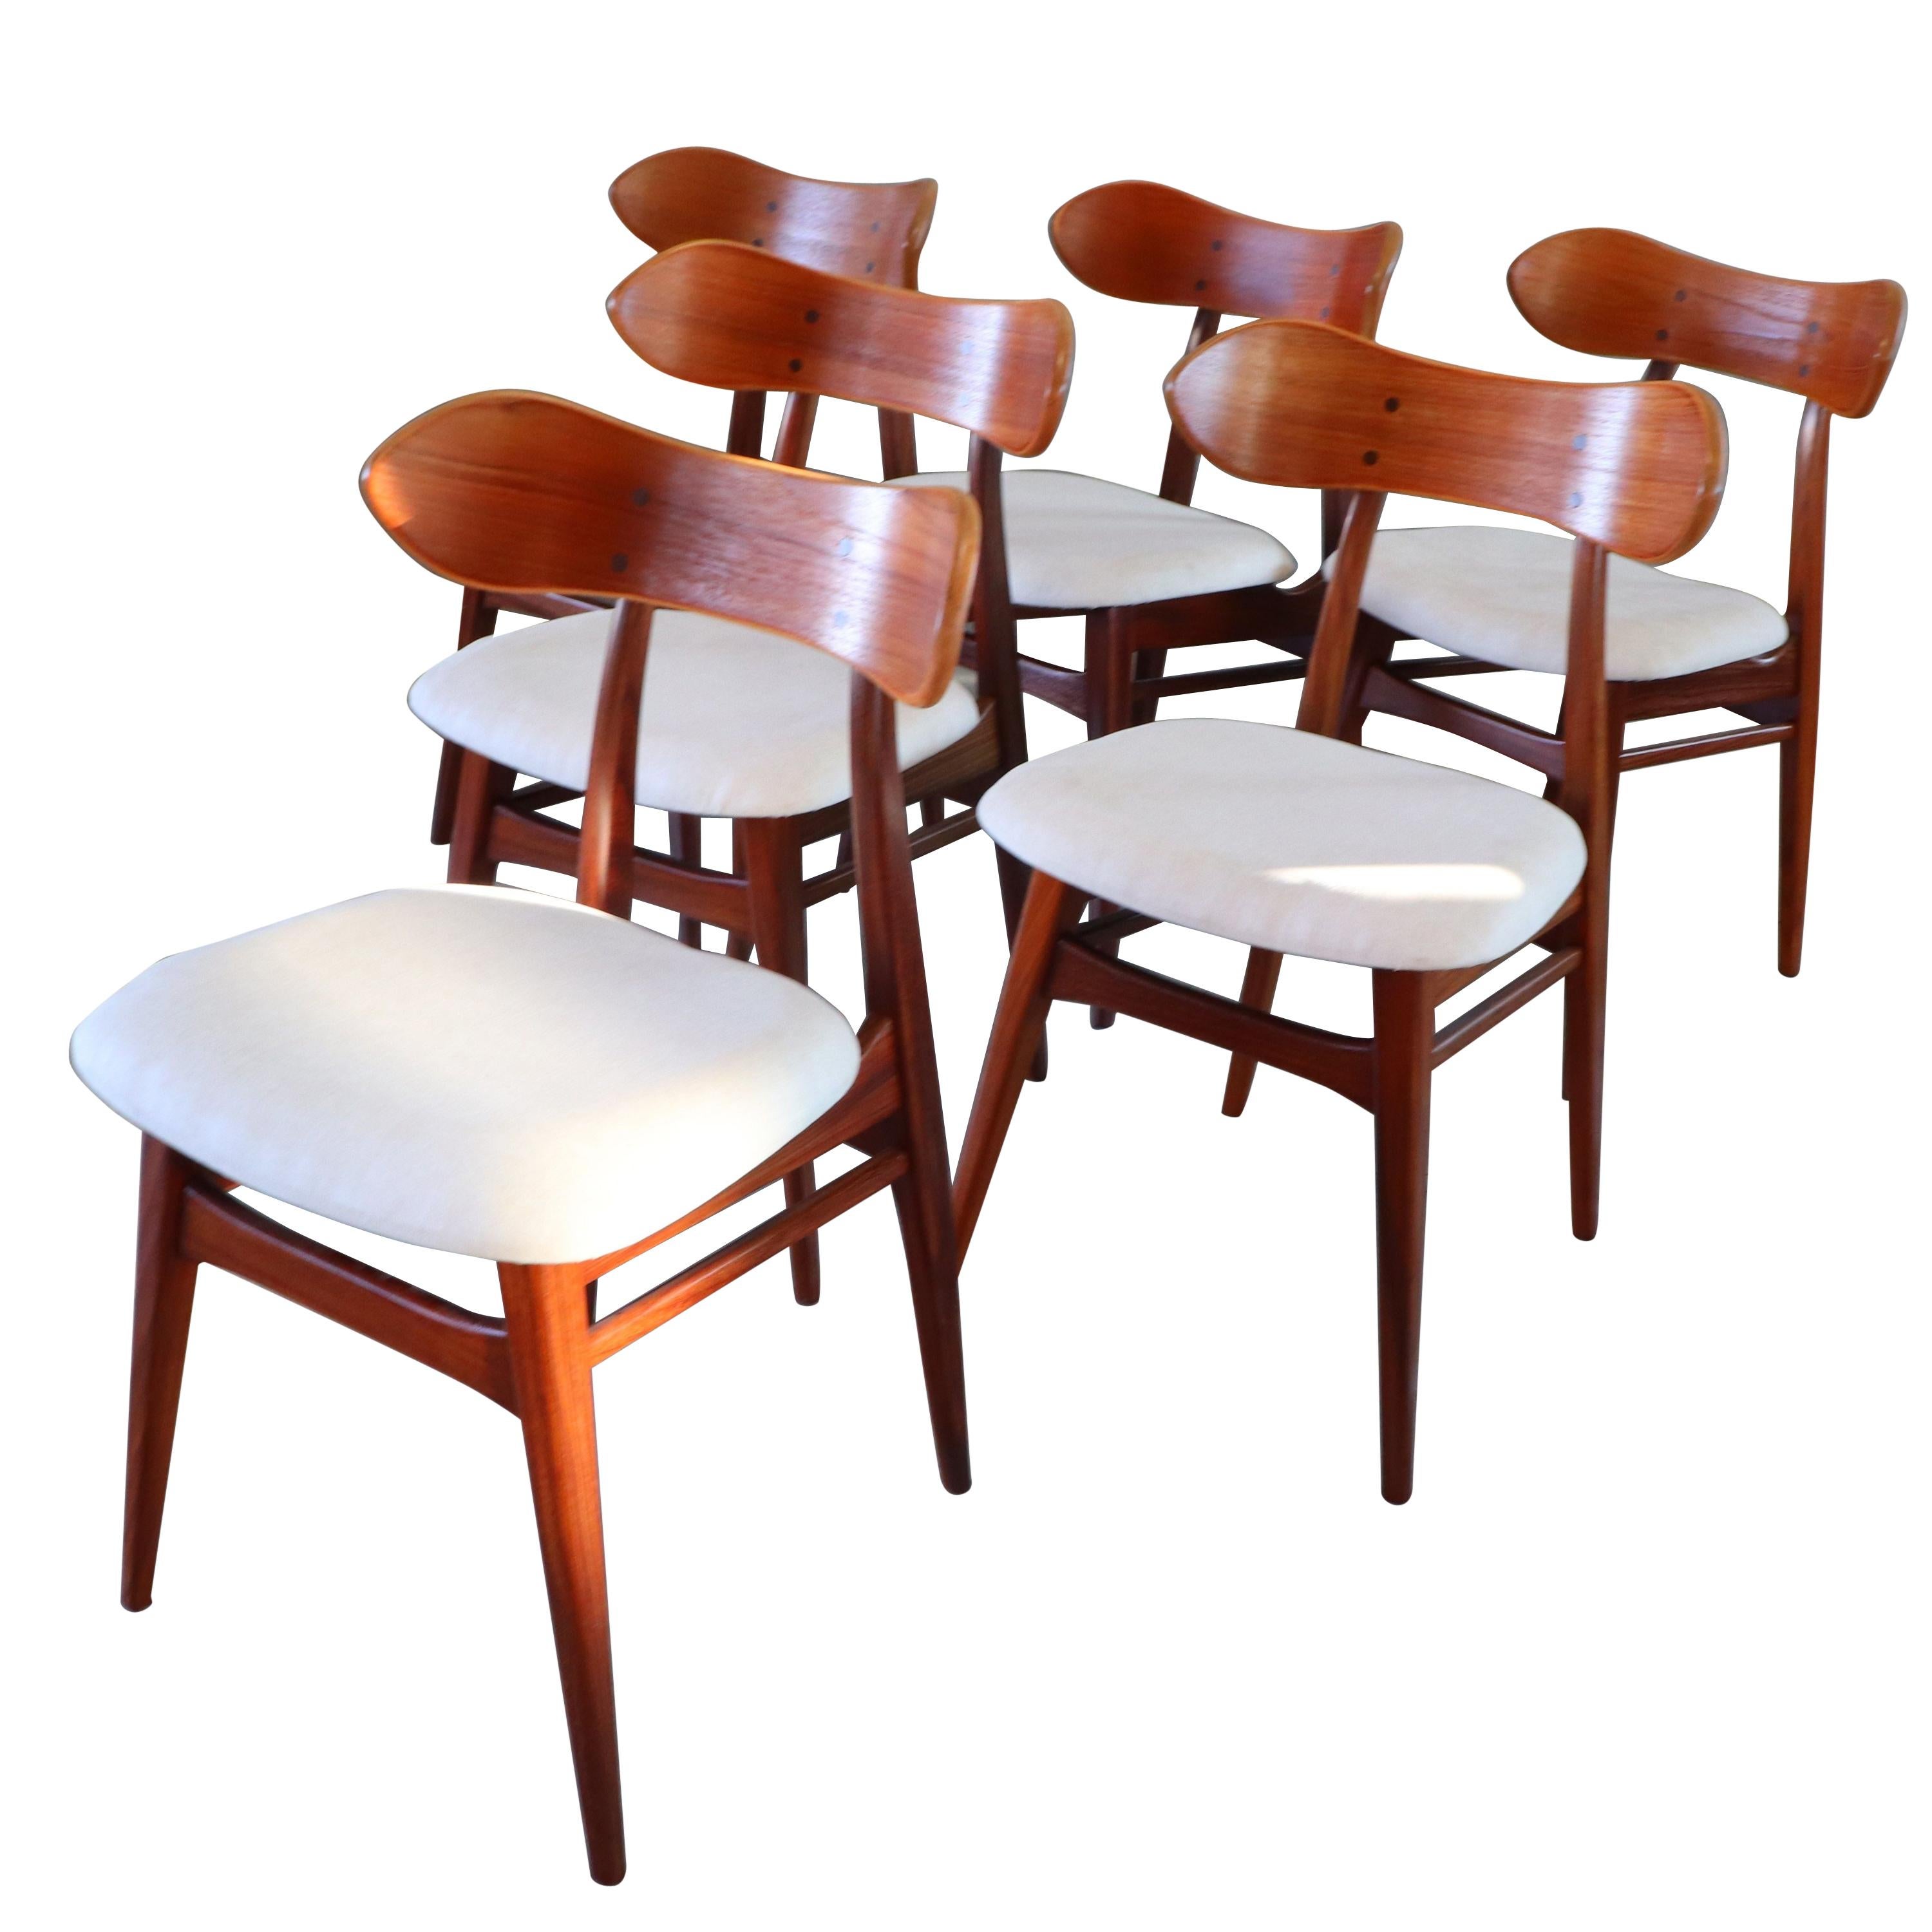 20th Century Reupholstered Teak Dining Chairs by Louis Van Teeffelen for Webe